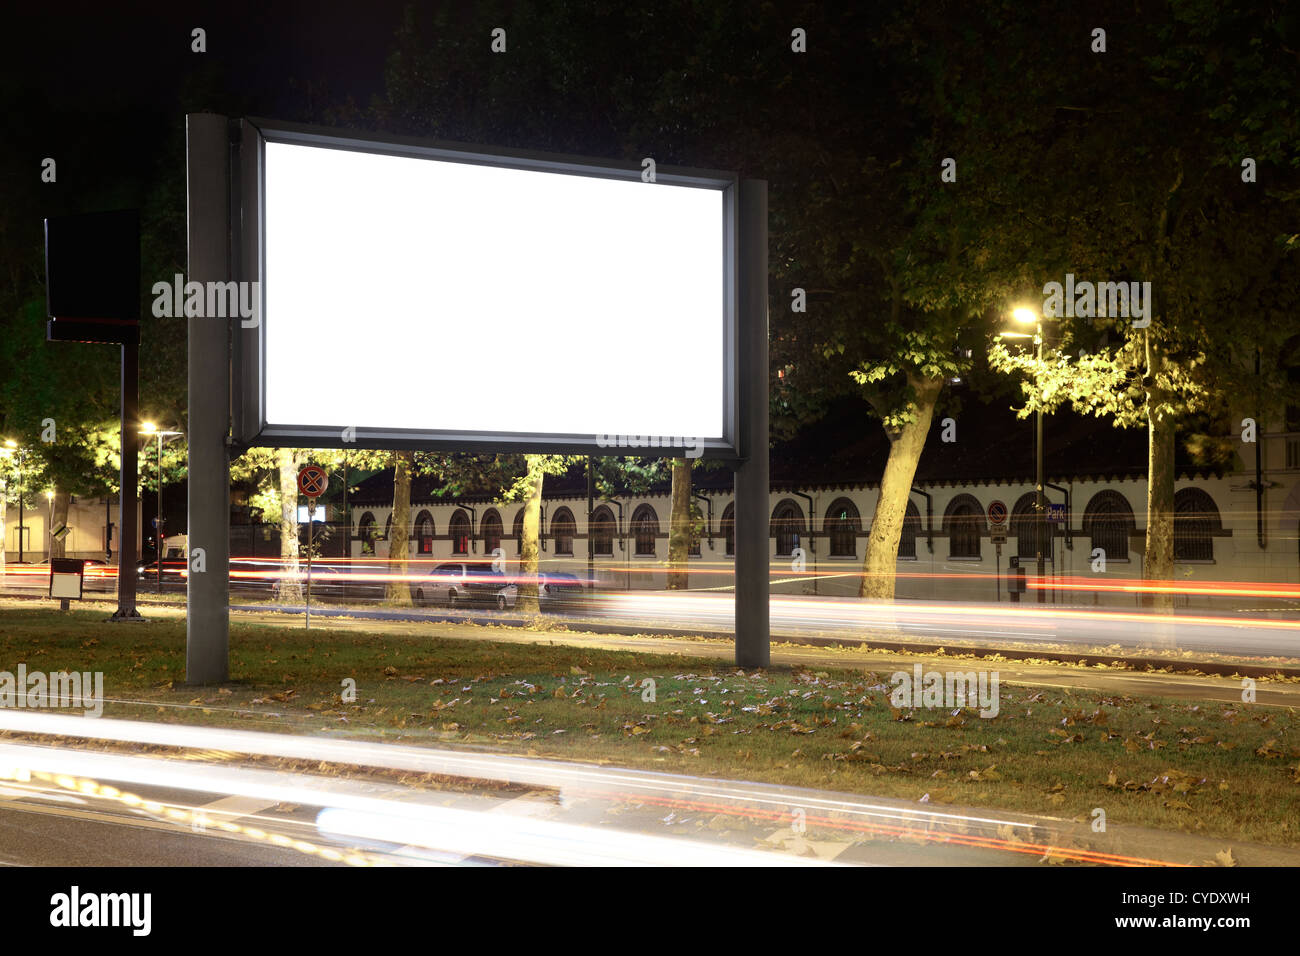 Leeren Plakatwand in der Stadt bei Nacht Stockfoto